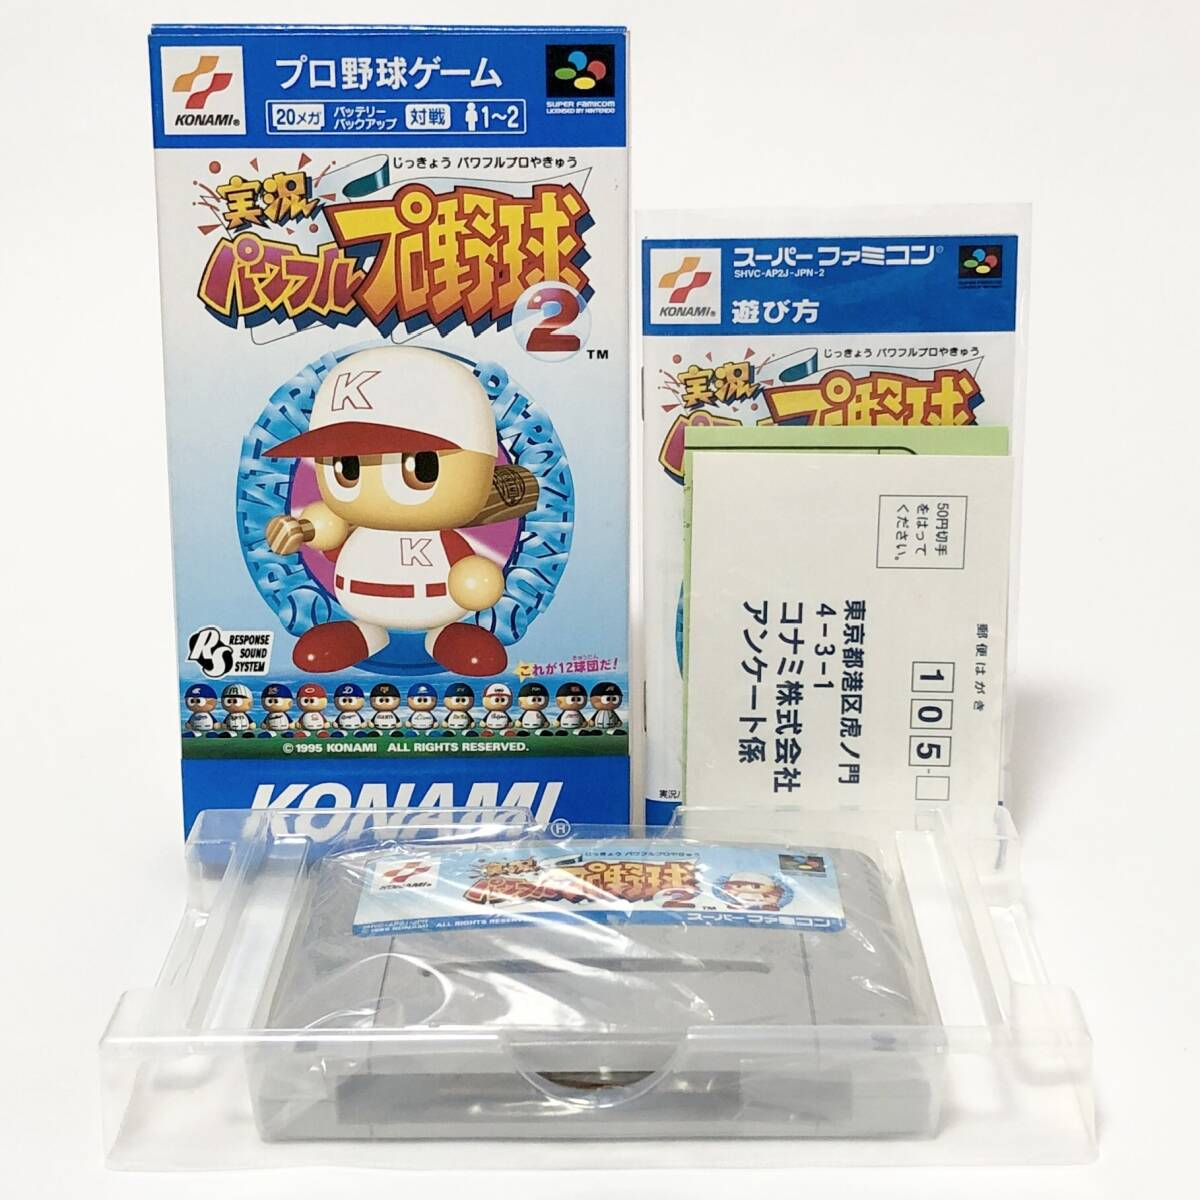  Super Famicom real . powerful Professional Baseball 2 box opinion attaching pain equipped Konami Super Famicom Jikkyou Powerful Pro Yakyuu 2 CIB Tested Konami